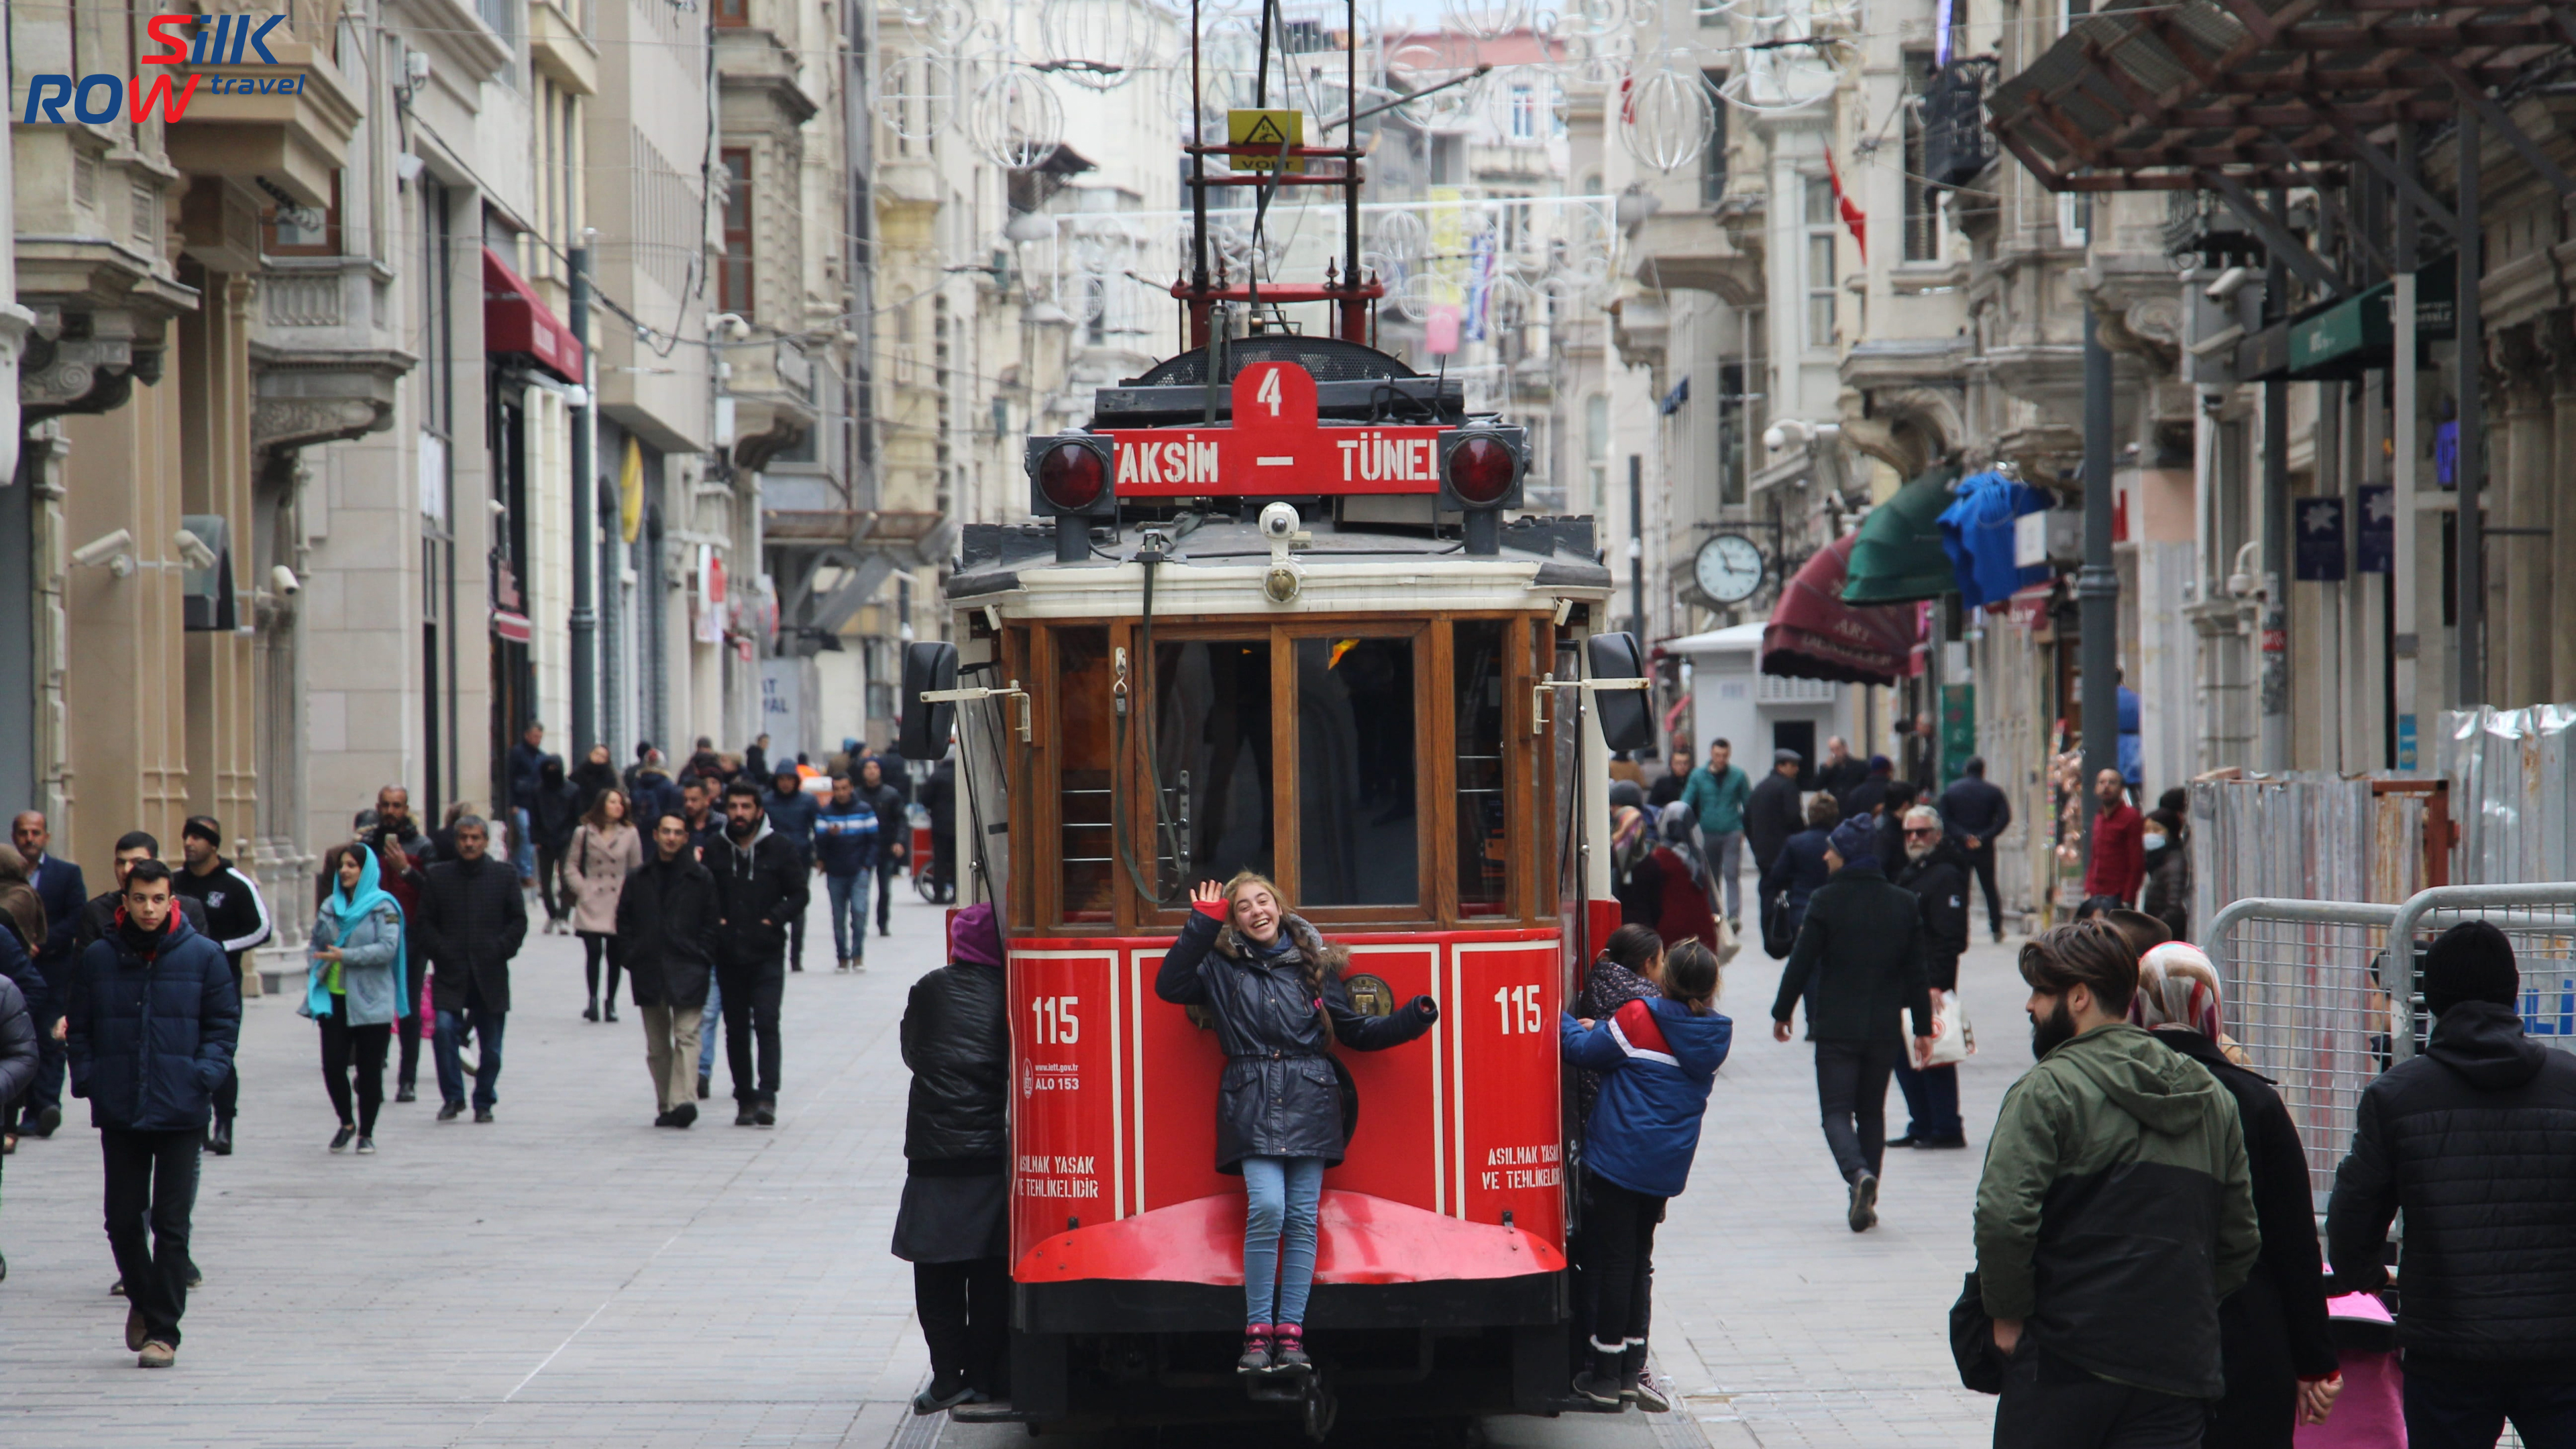 Таксимо район стамбула. Таксим Истикляль Стамбул. Площадь Таксим и улица Истикляль в Стамбуле. Трамвай на Истикляль в Стамбуле. Стамбул, Бейоглу, площадь Таксим.